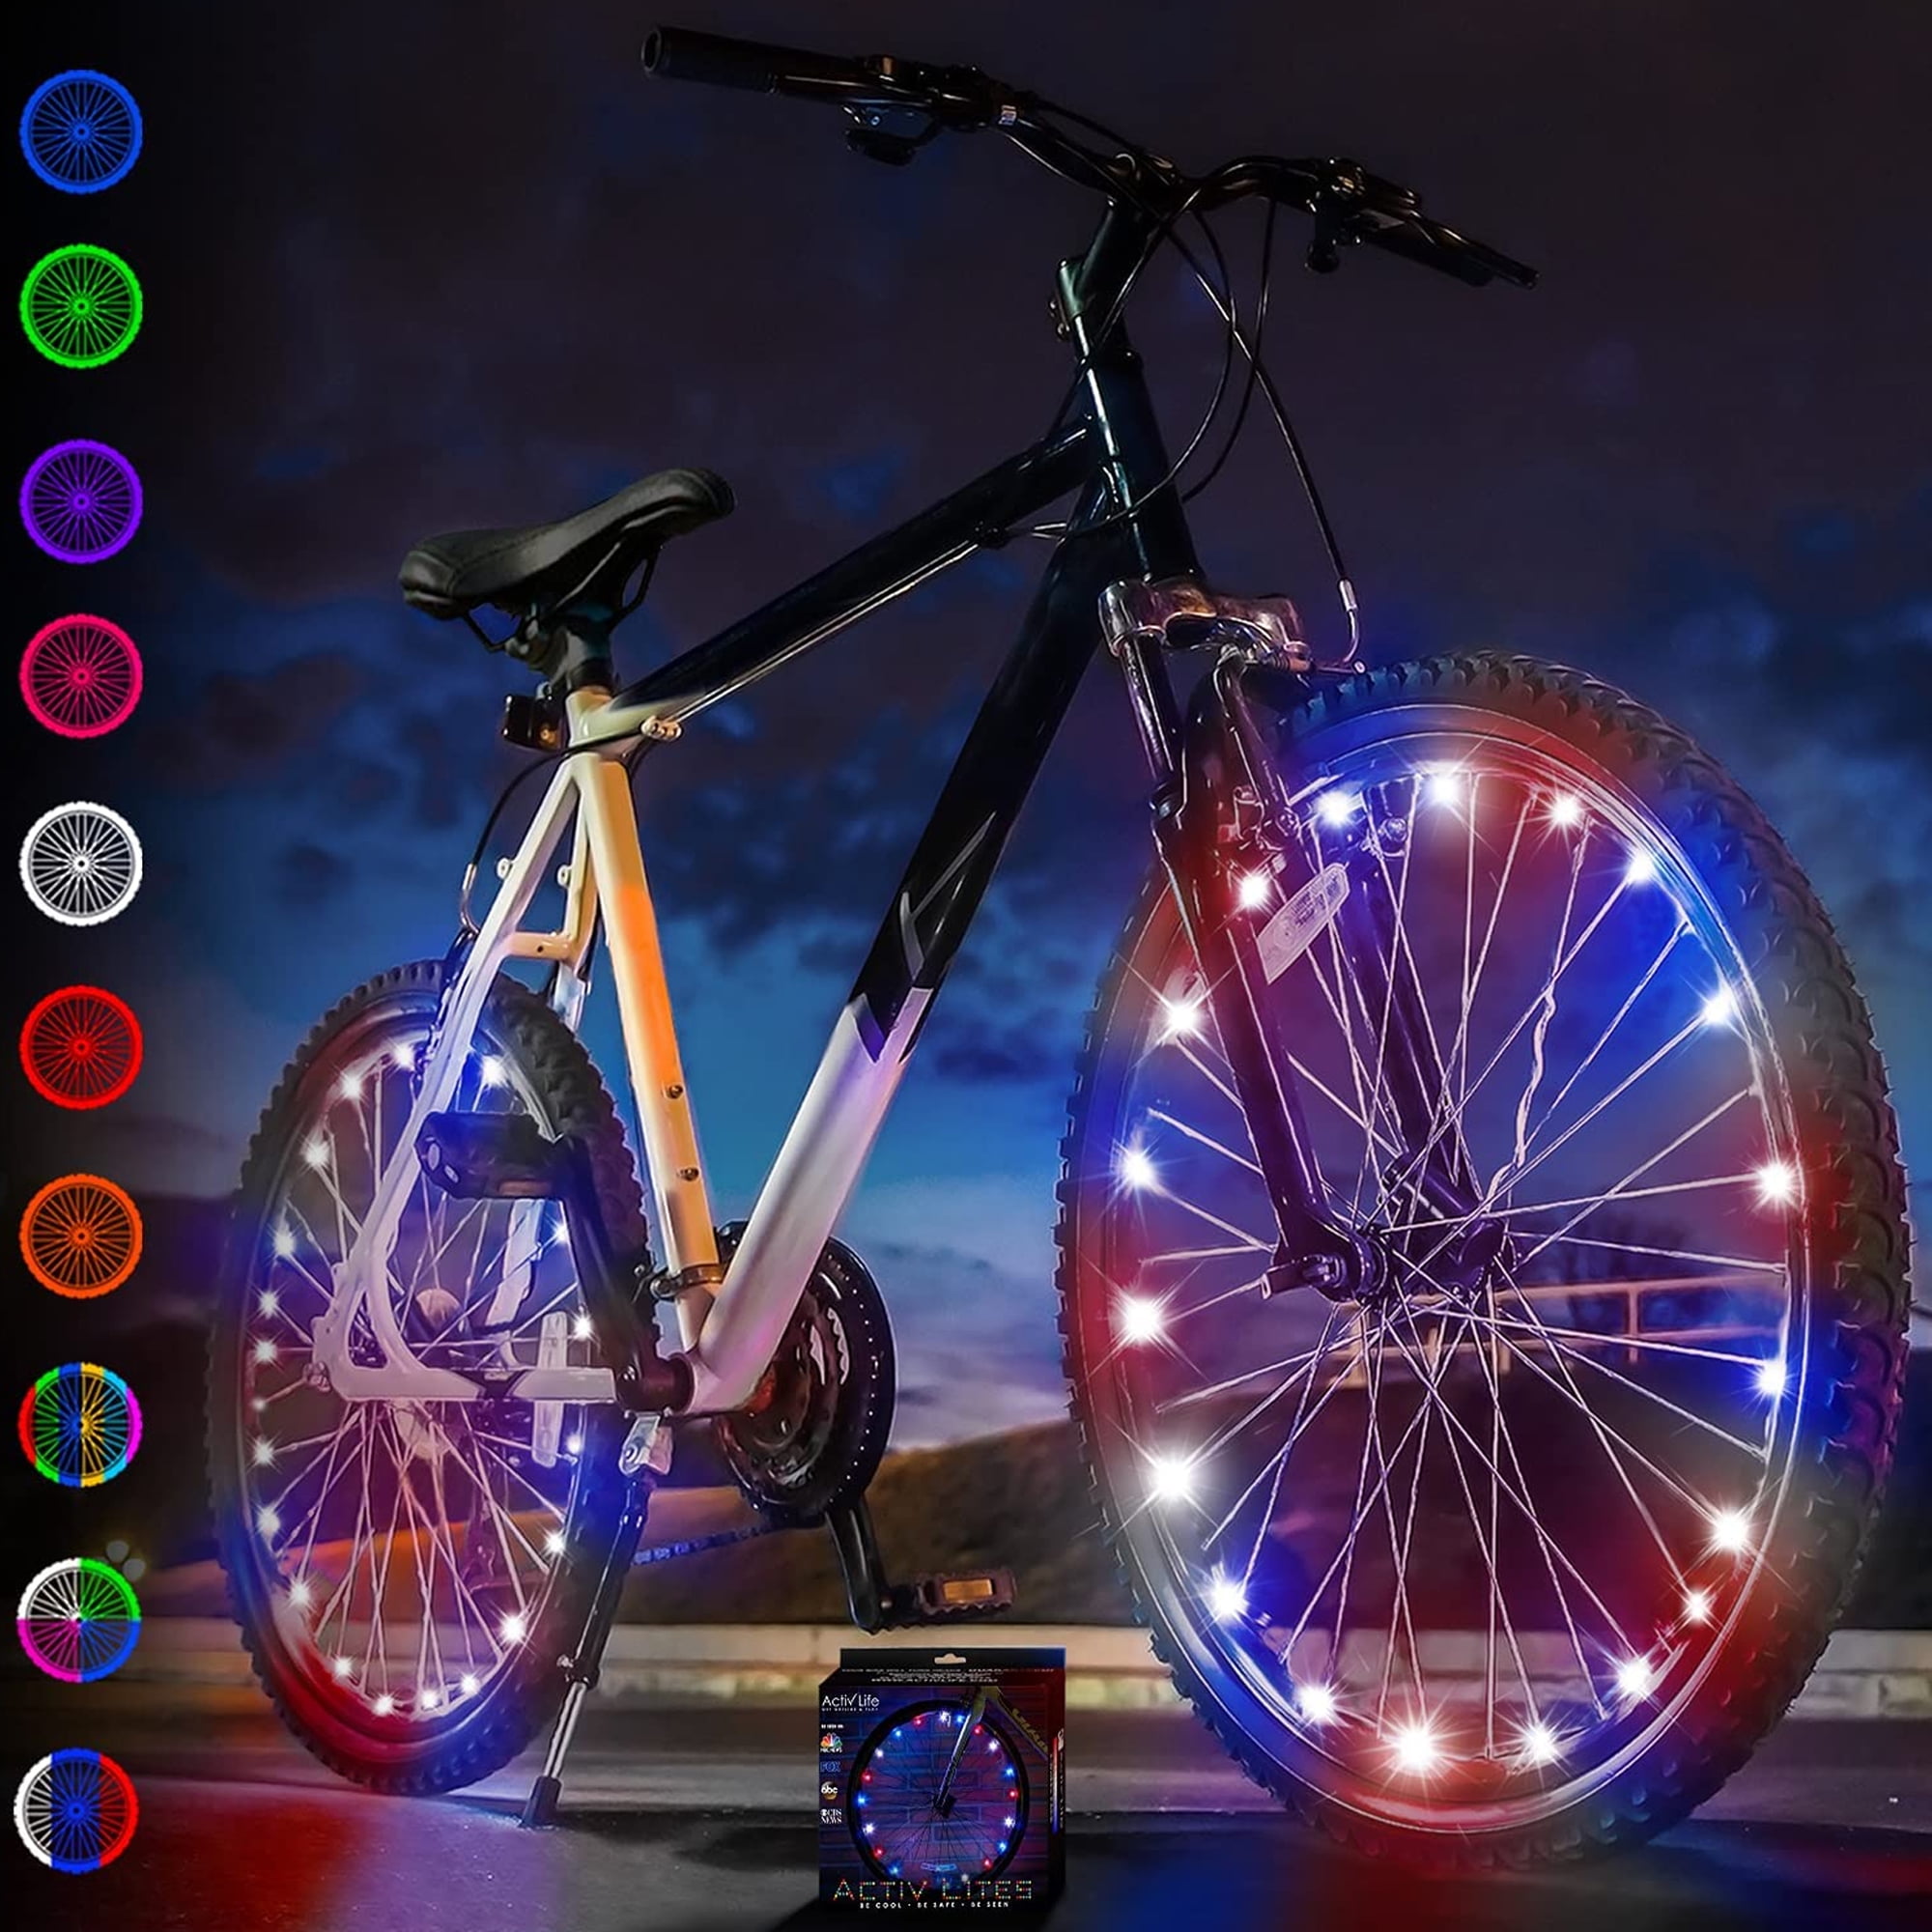 Bike Lights, Bicycle Lights For Sale